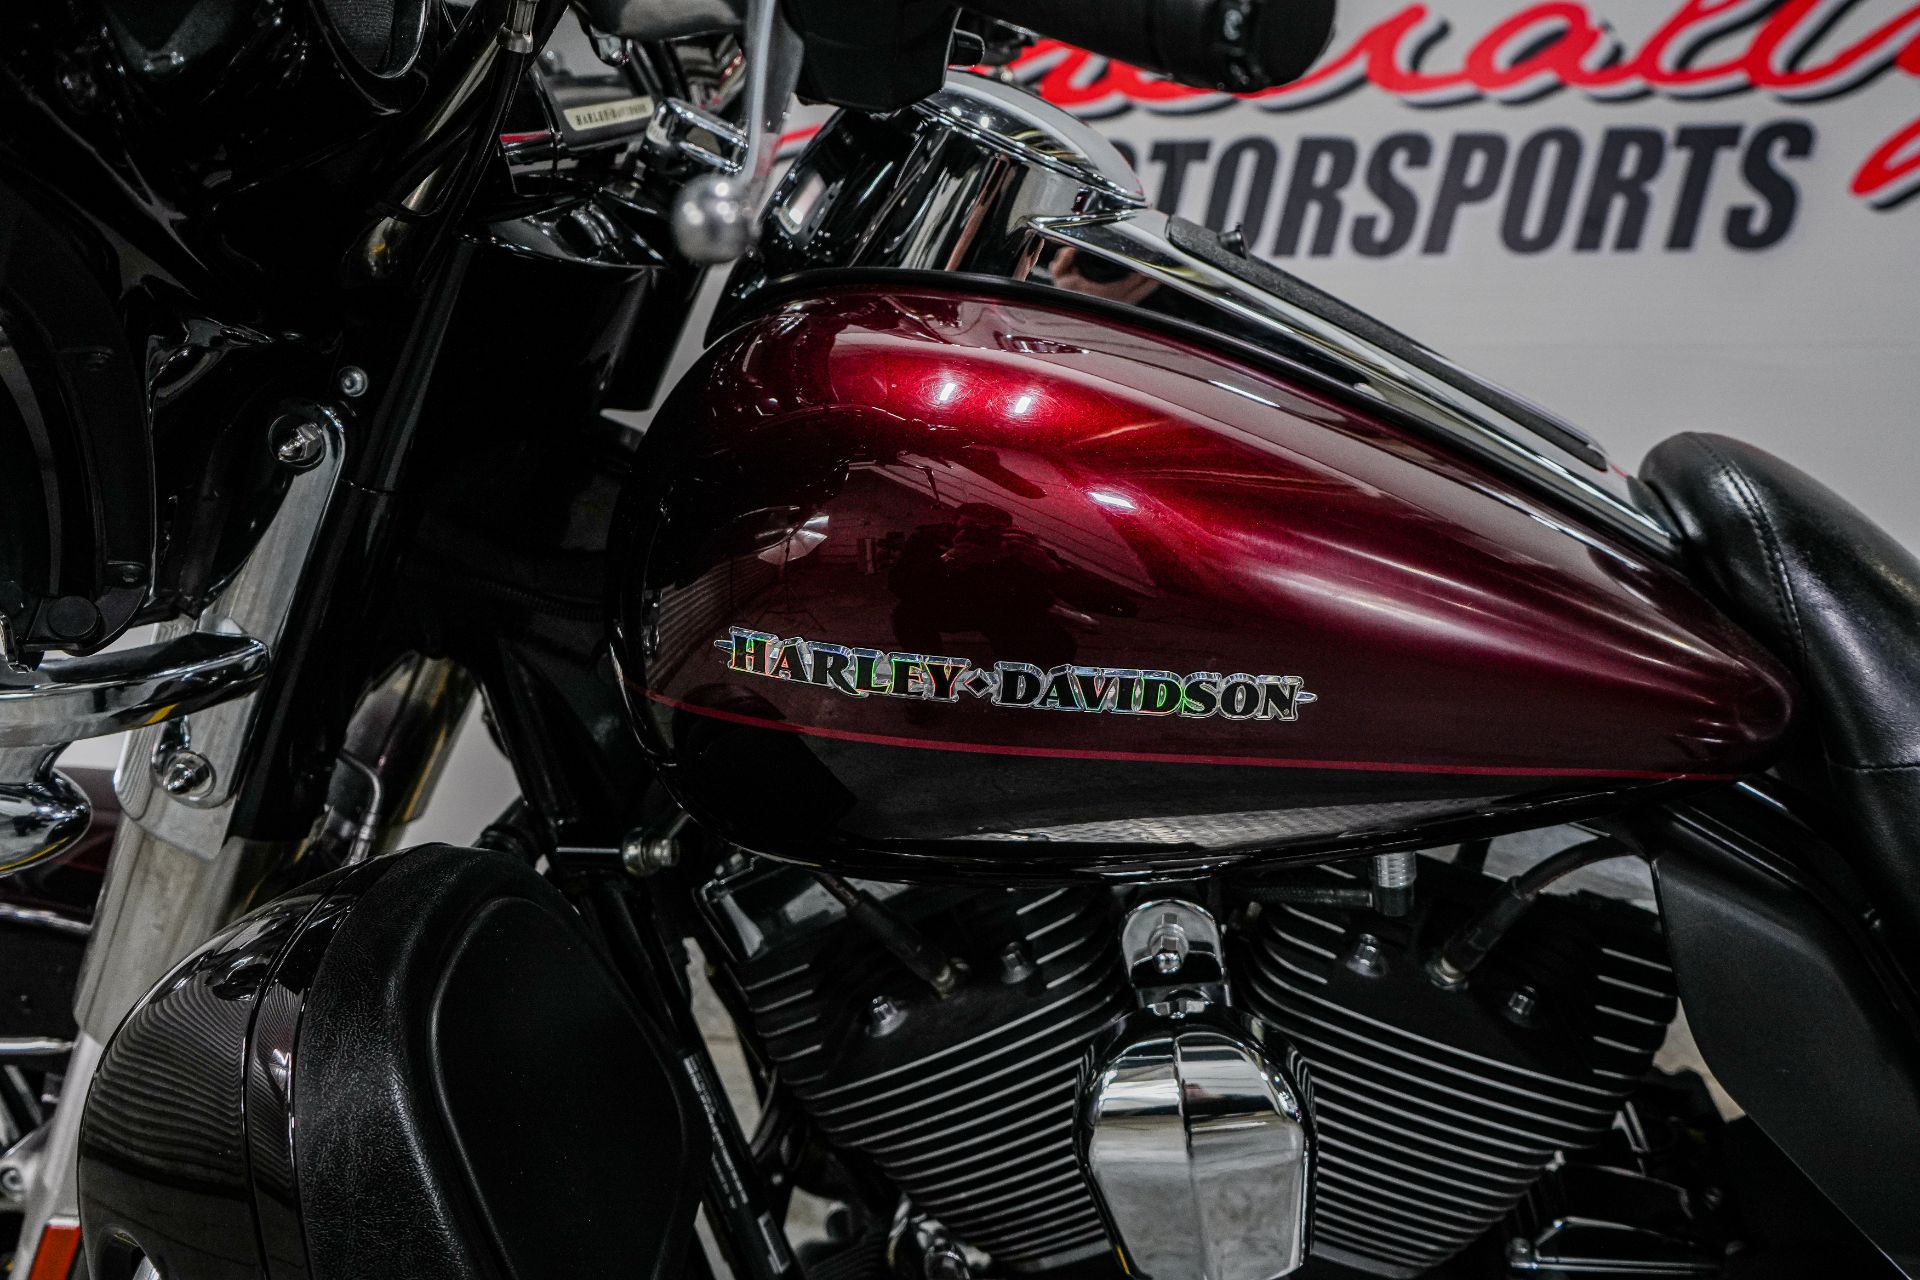 2015 Harley-Davidson Electra Glide® Ultra Classic® in Sacramento, California - Photo 5